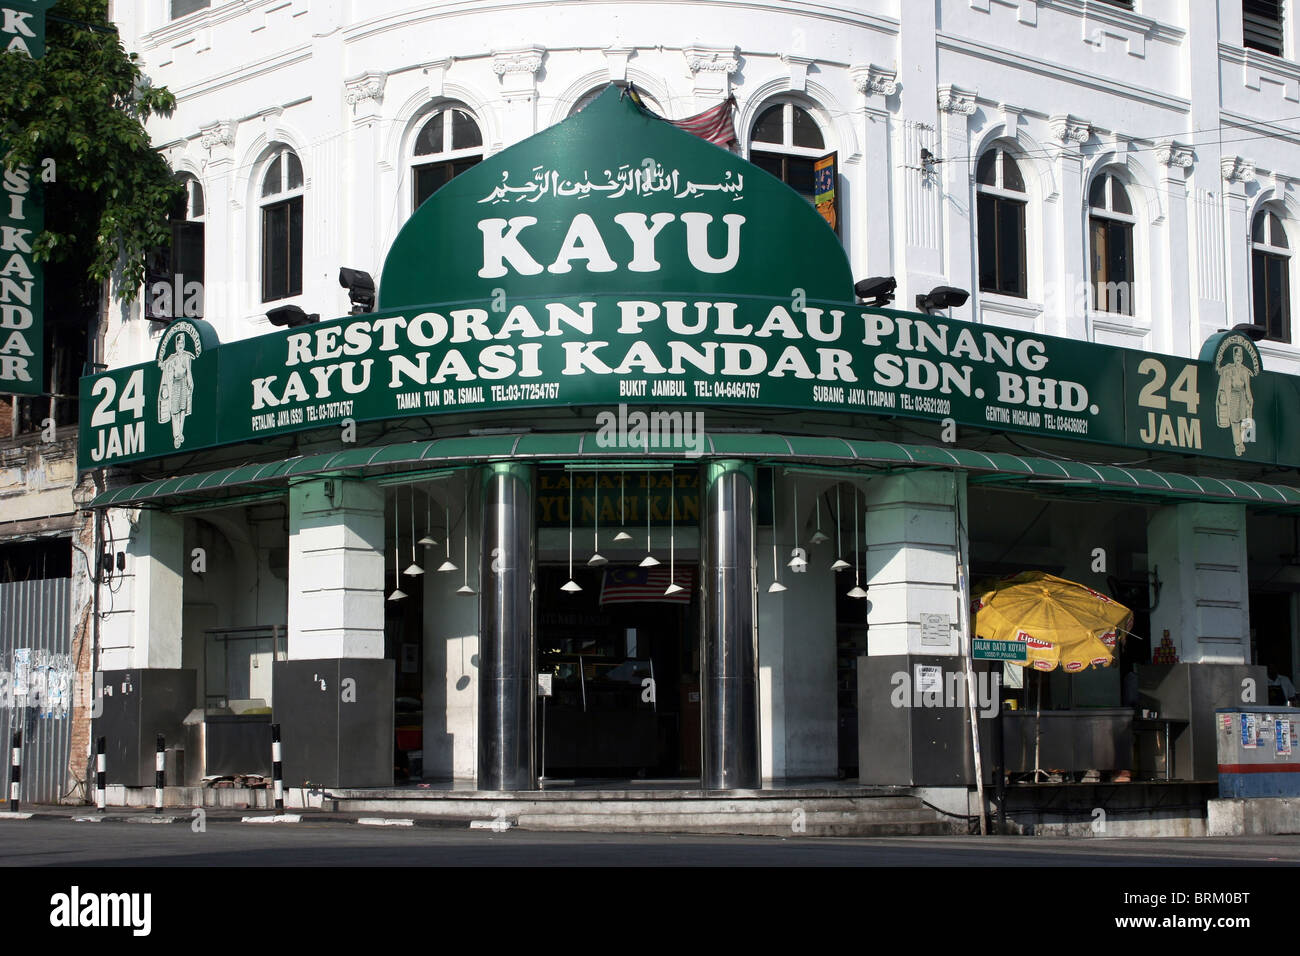 The Kayu Nasi Kandar Restaurant Serves As A City Landmark In The Georgetown District Of Penang Malaysia Stock Photo Alamy